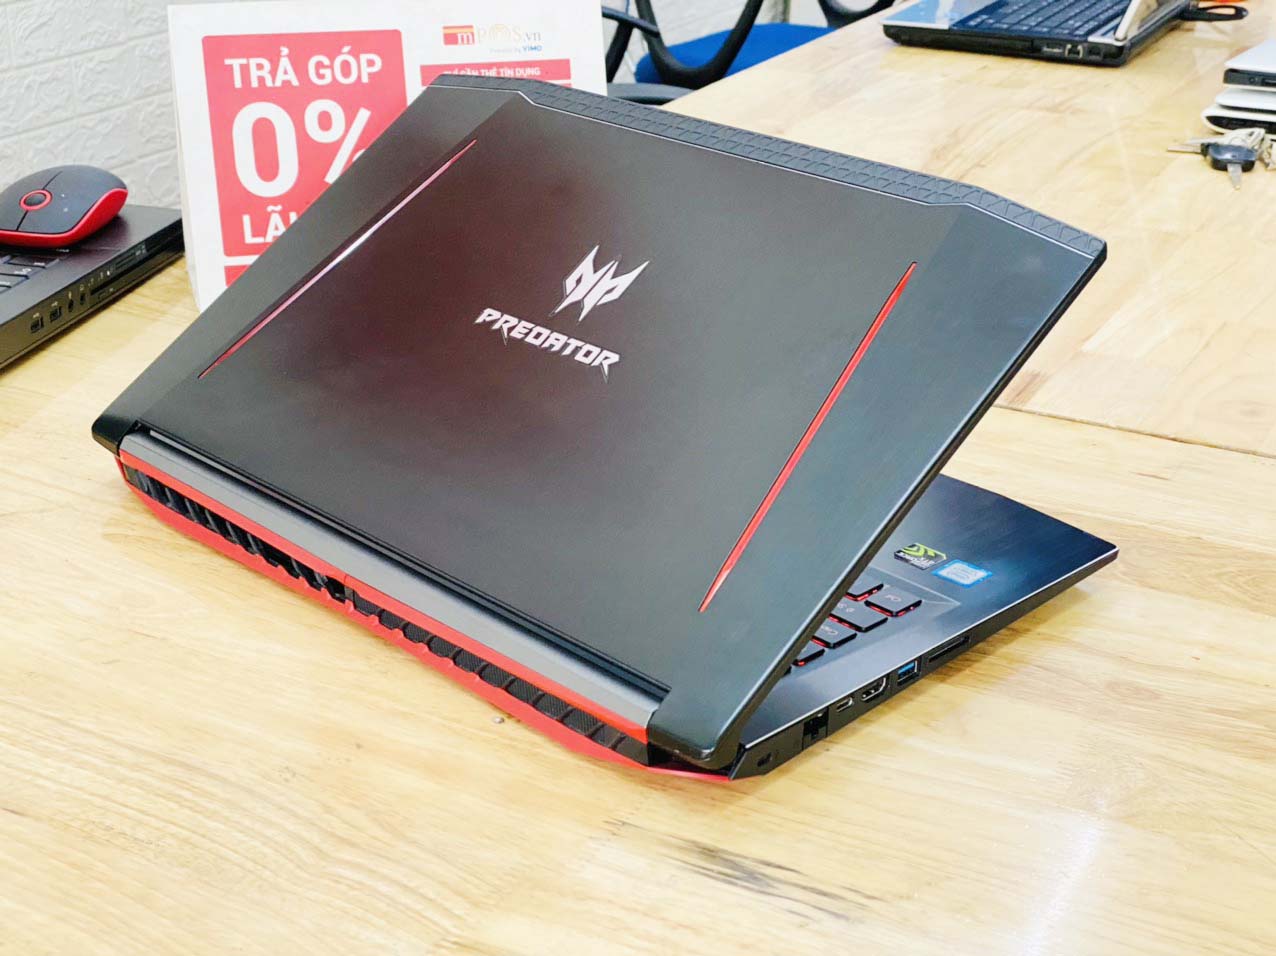 Laptop Gaming Acer Predator PH315-51 i7-8750H Ram 16G SSD 512G Nvidia GTX 1060(6G) 15.6 inch Full HD Like New